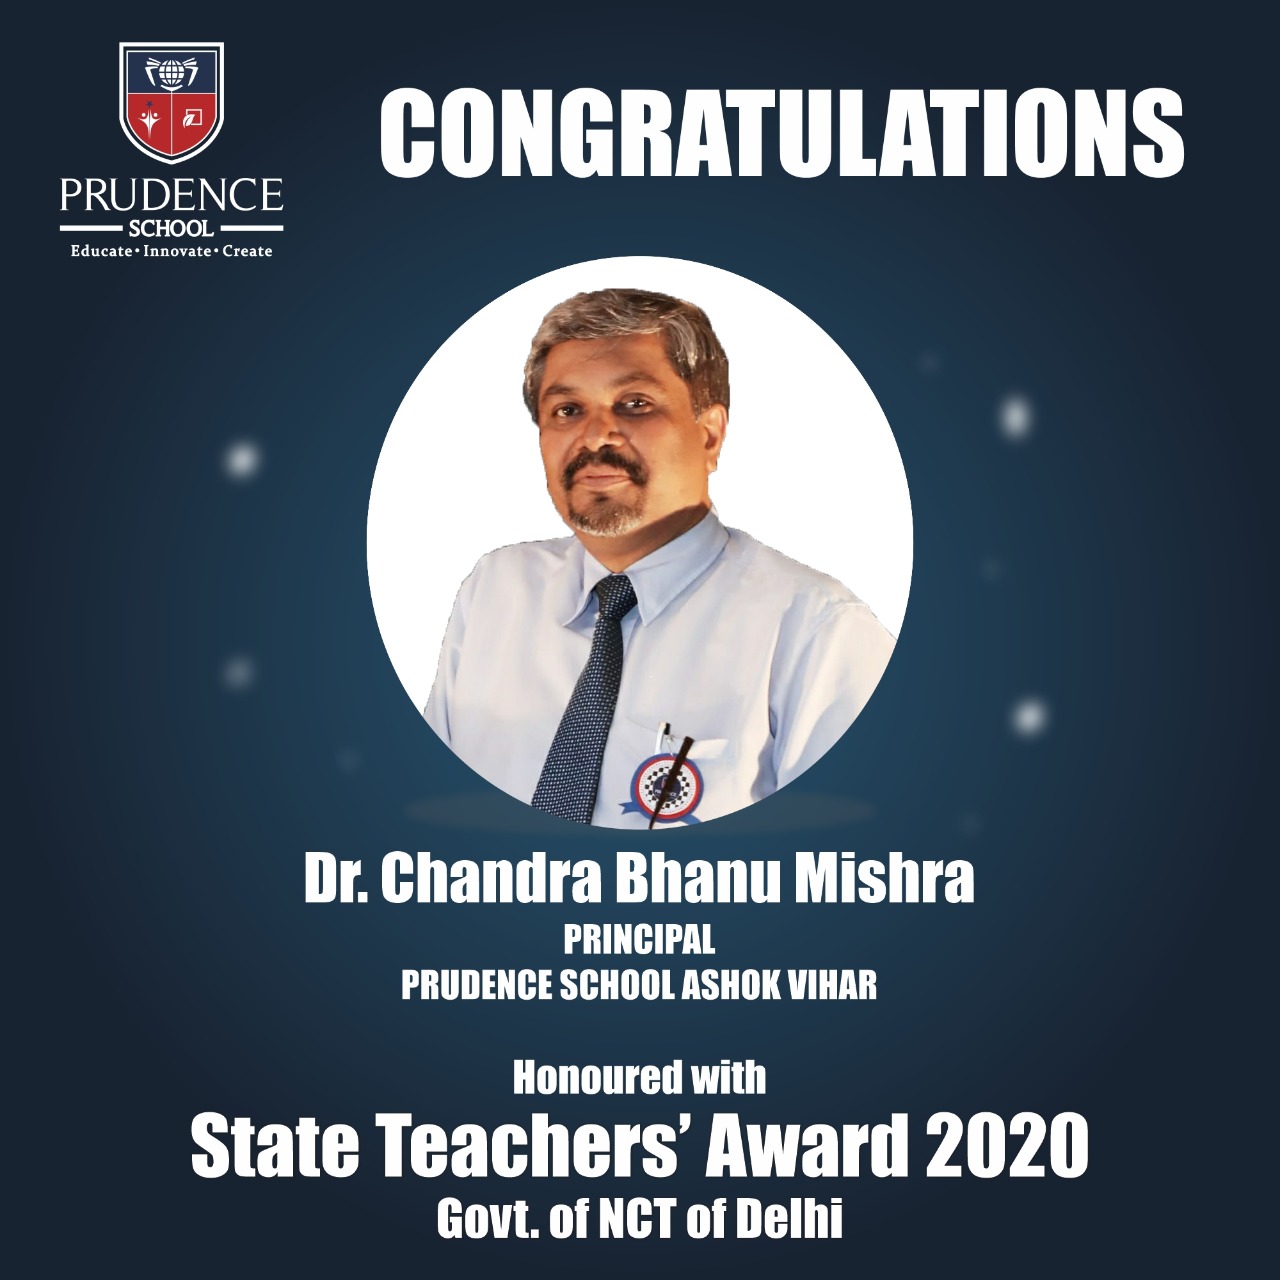 State Teachers' Award 2020